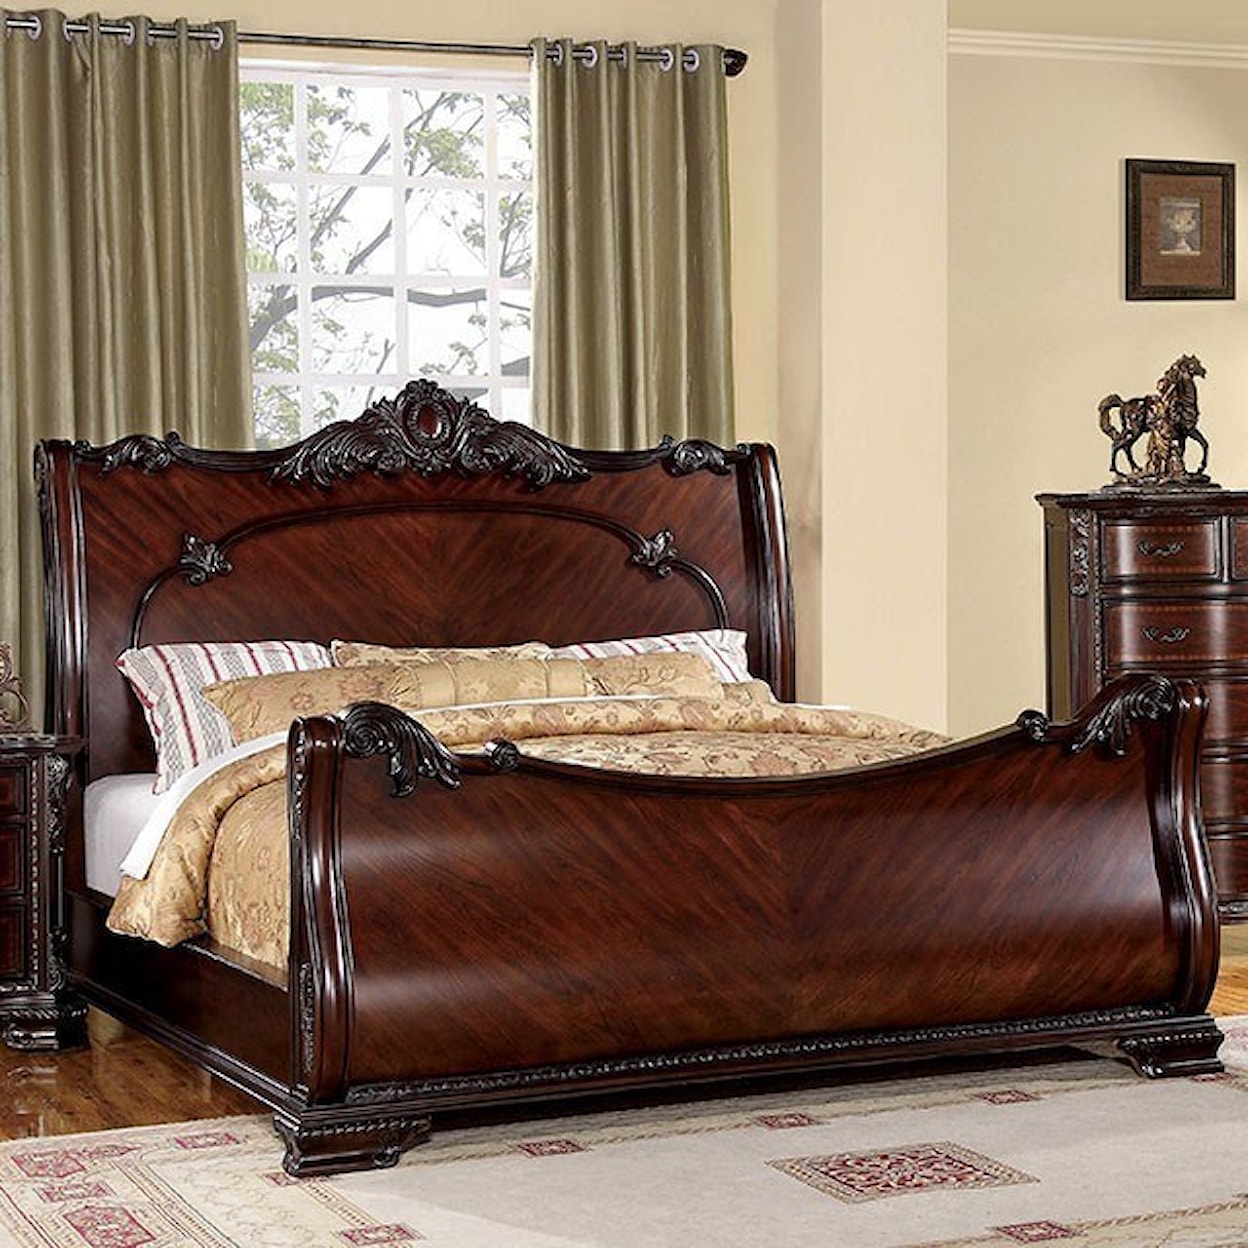 Furniture of America Bellefonte Queen Bed